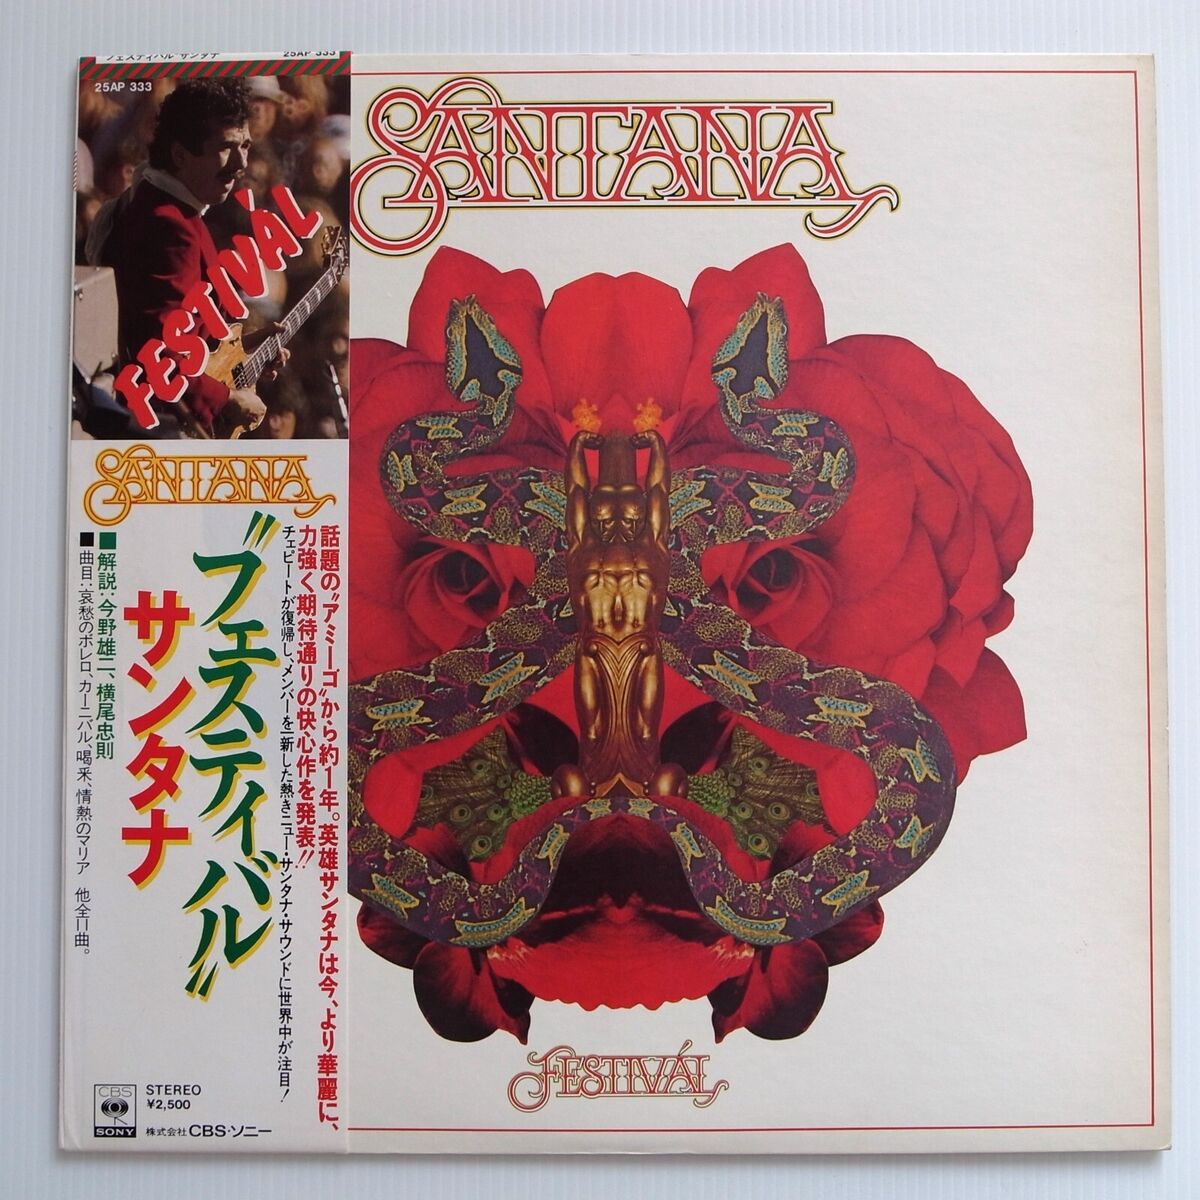 Santana ‎– Festival JAPAN vinyl LP 1976 NEAR MINT 25AP 333